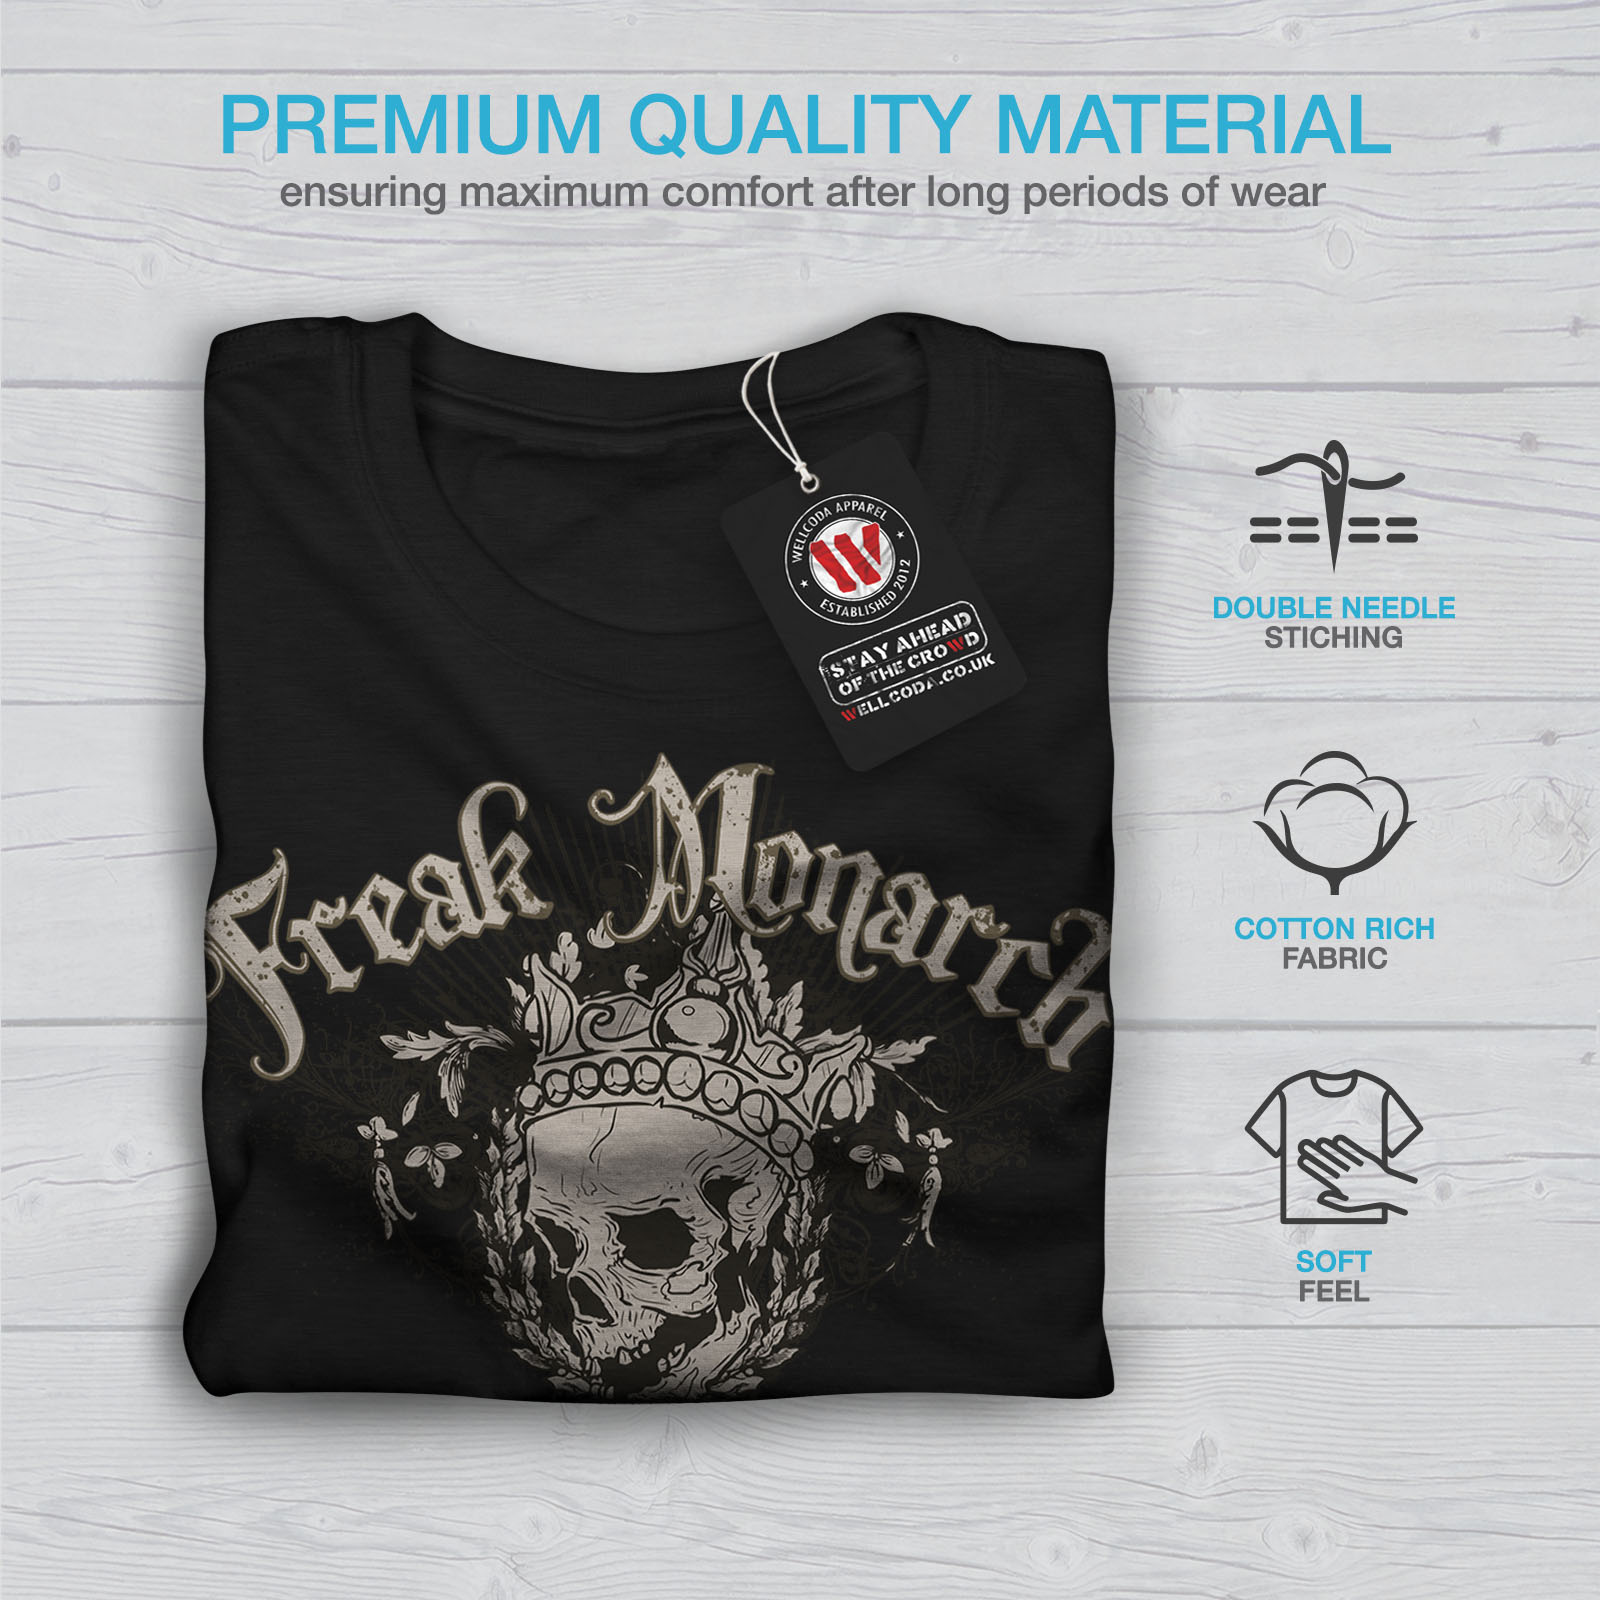 Wellcoda Freak Crazy Mens T-shirt, King Graphic Design Printed Tee | eBay